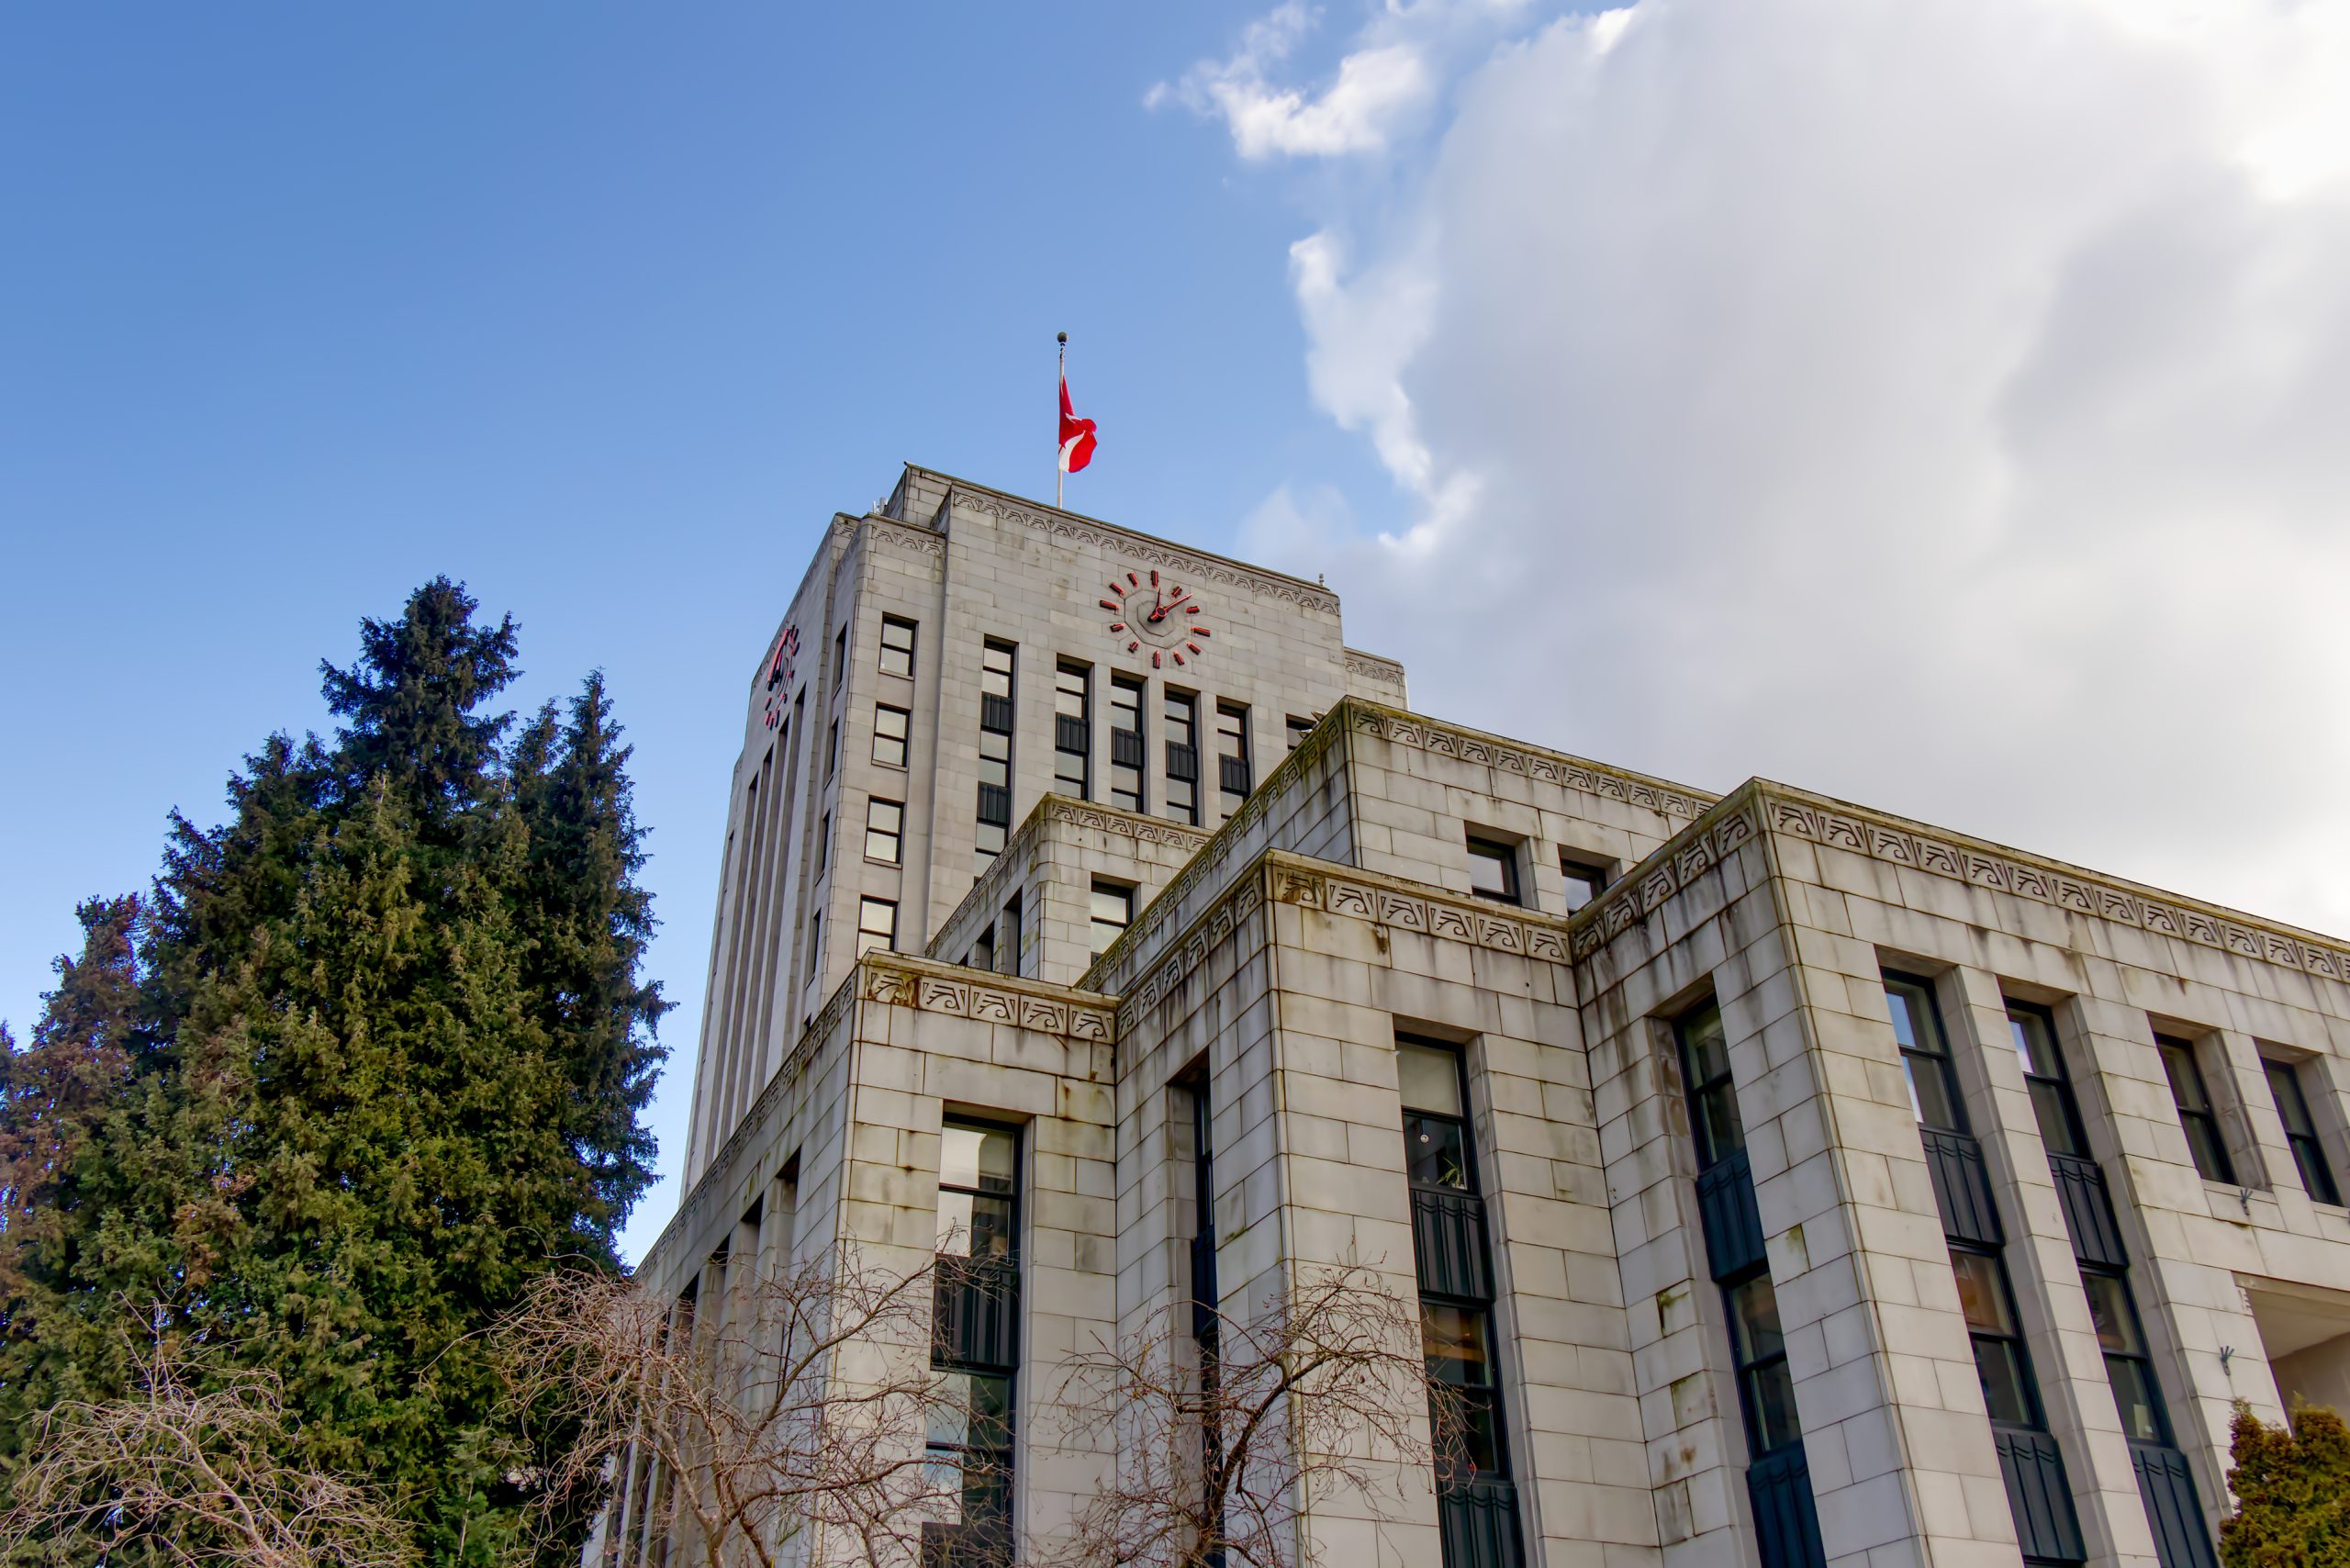 B.C. CITY WANTS HOUSING PLAN DISCLOSURE ORDER QUASHED